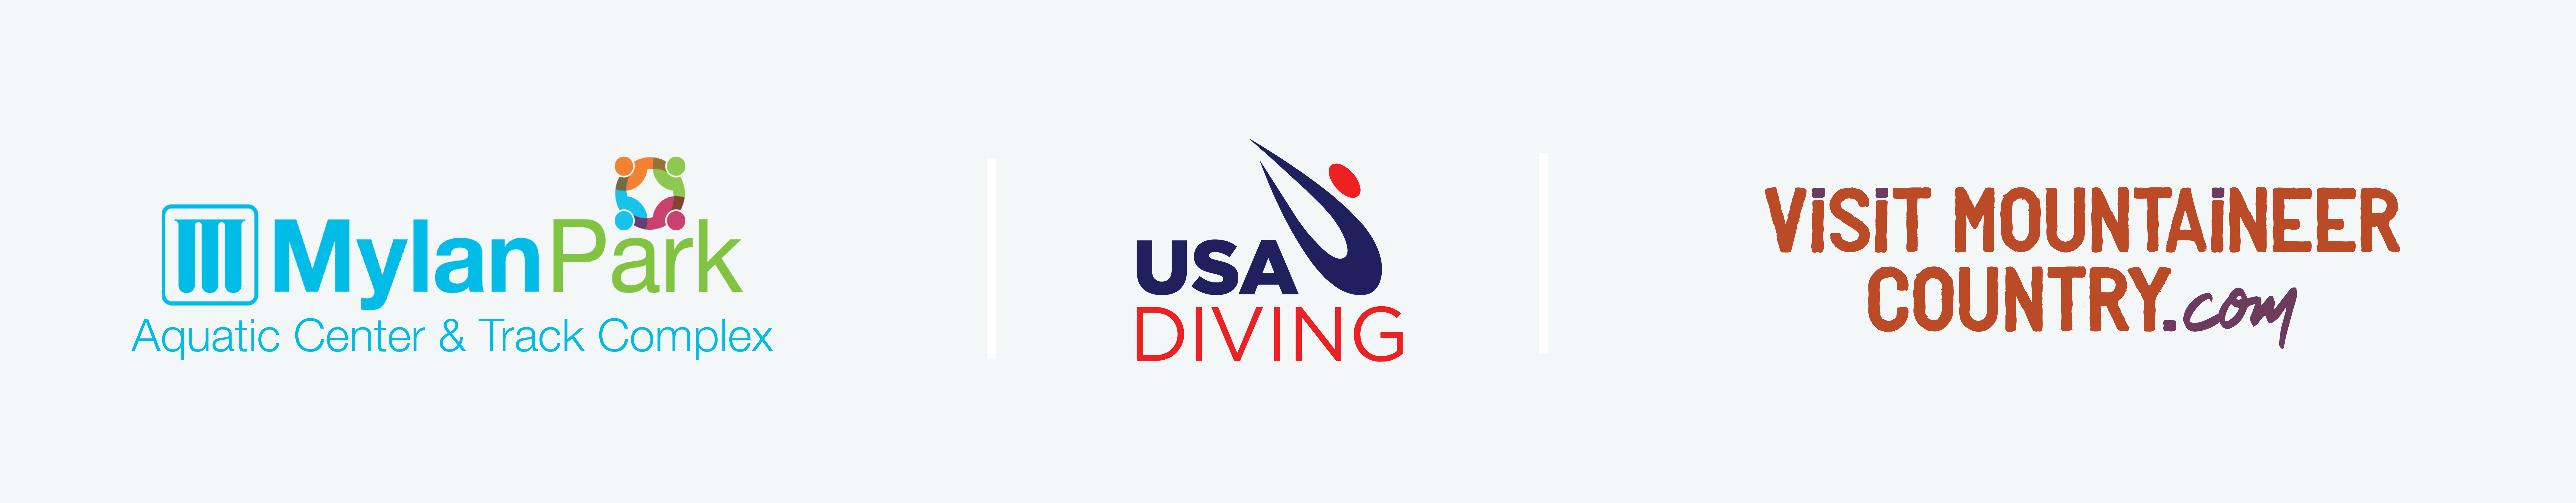 Mylan Park Aquatic Center & Track Complex, USA Diving, & Visit Mountaineer Country.com Logos